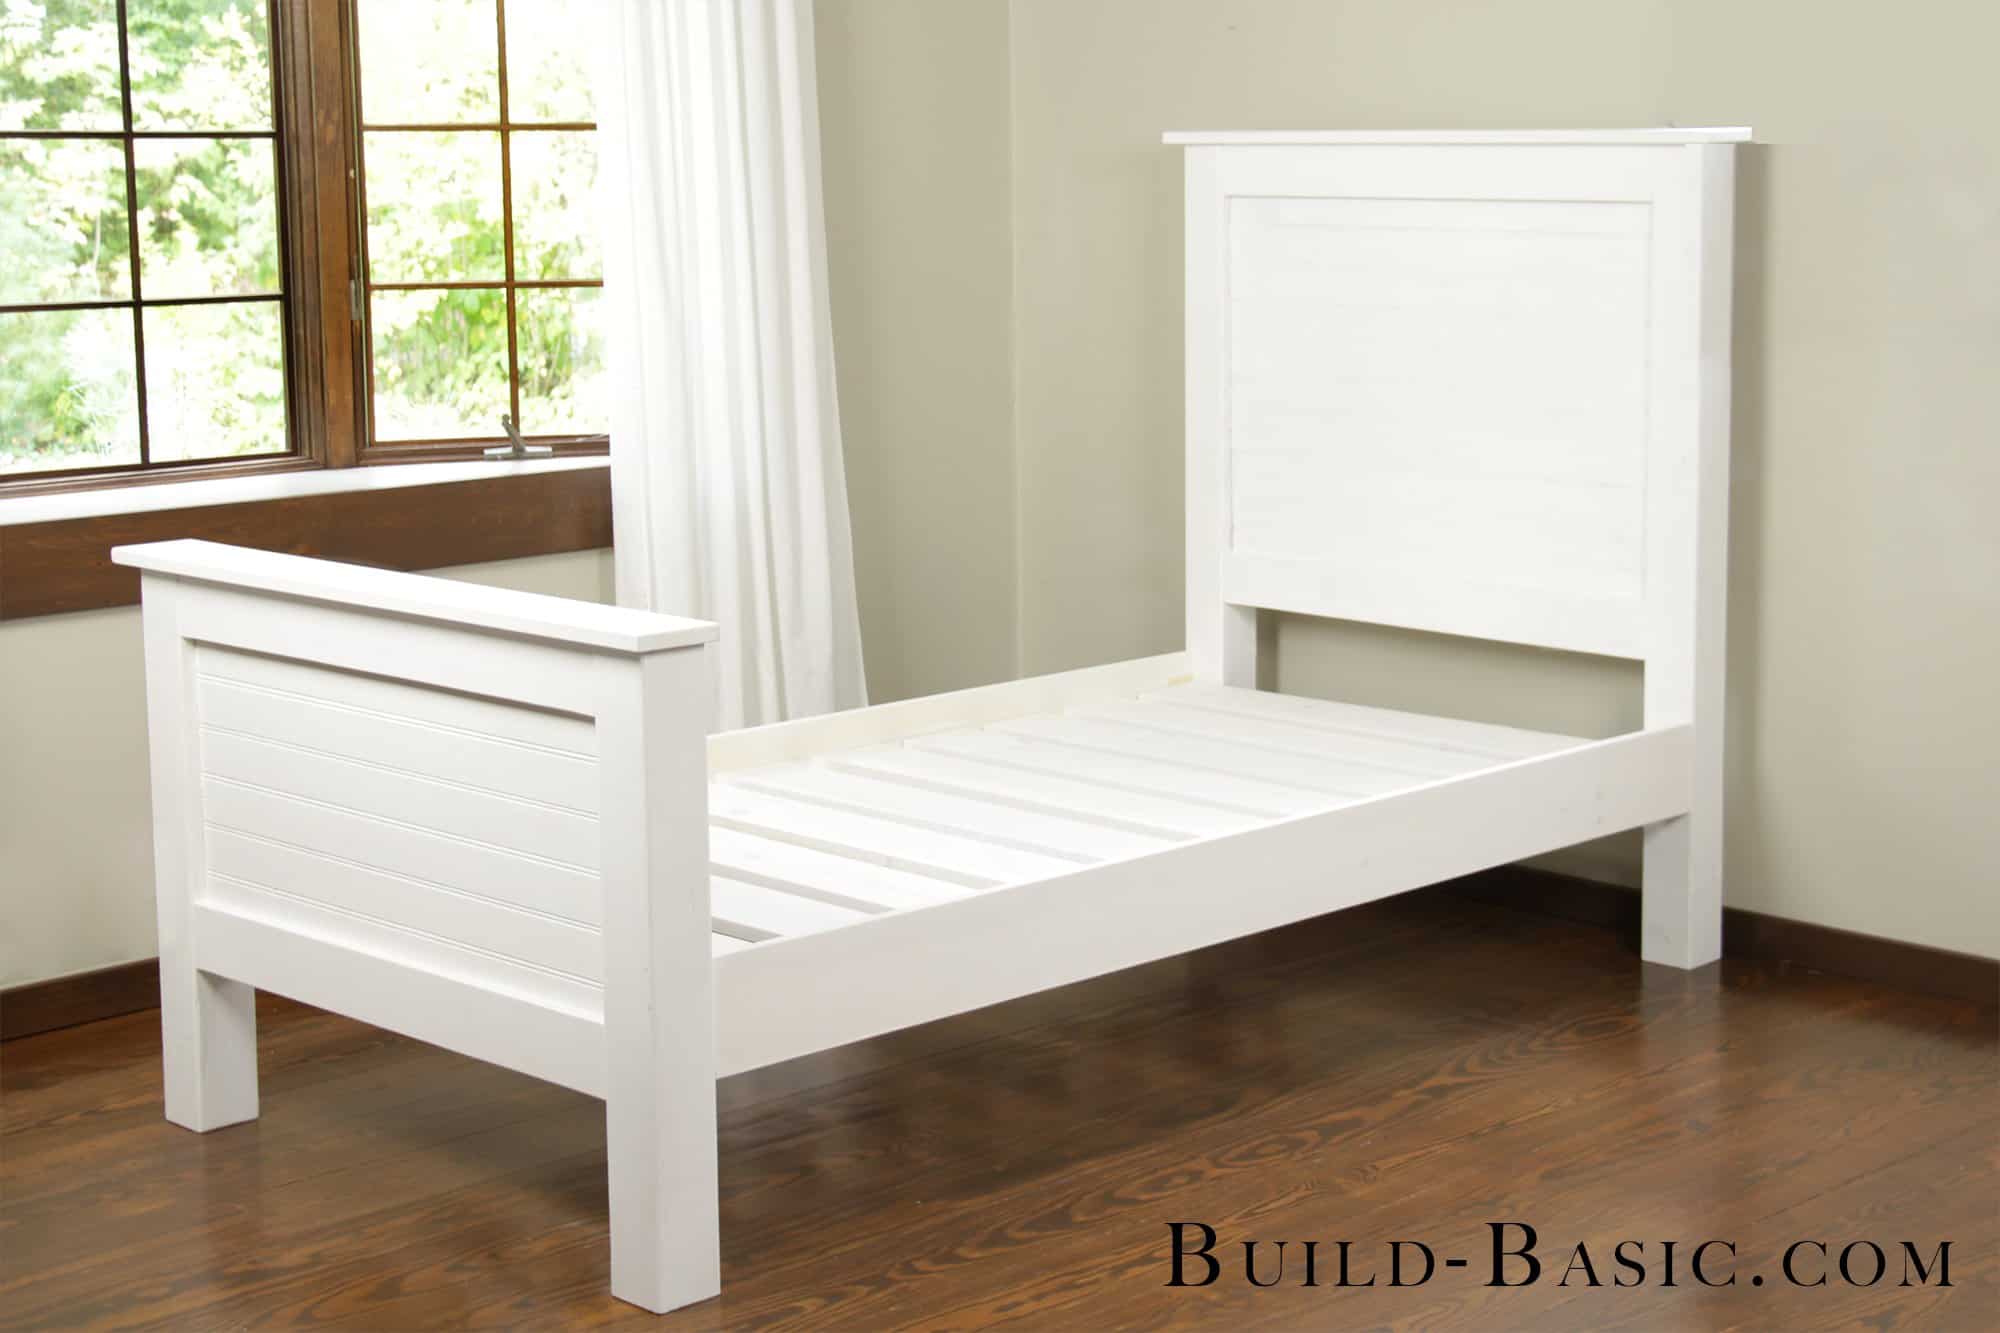 Simple Diy Bed Plans For Kids